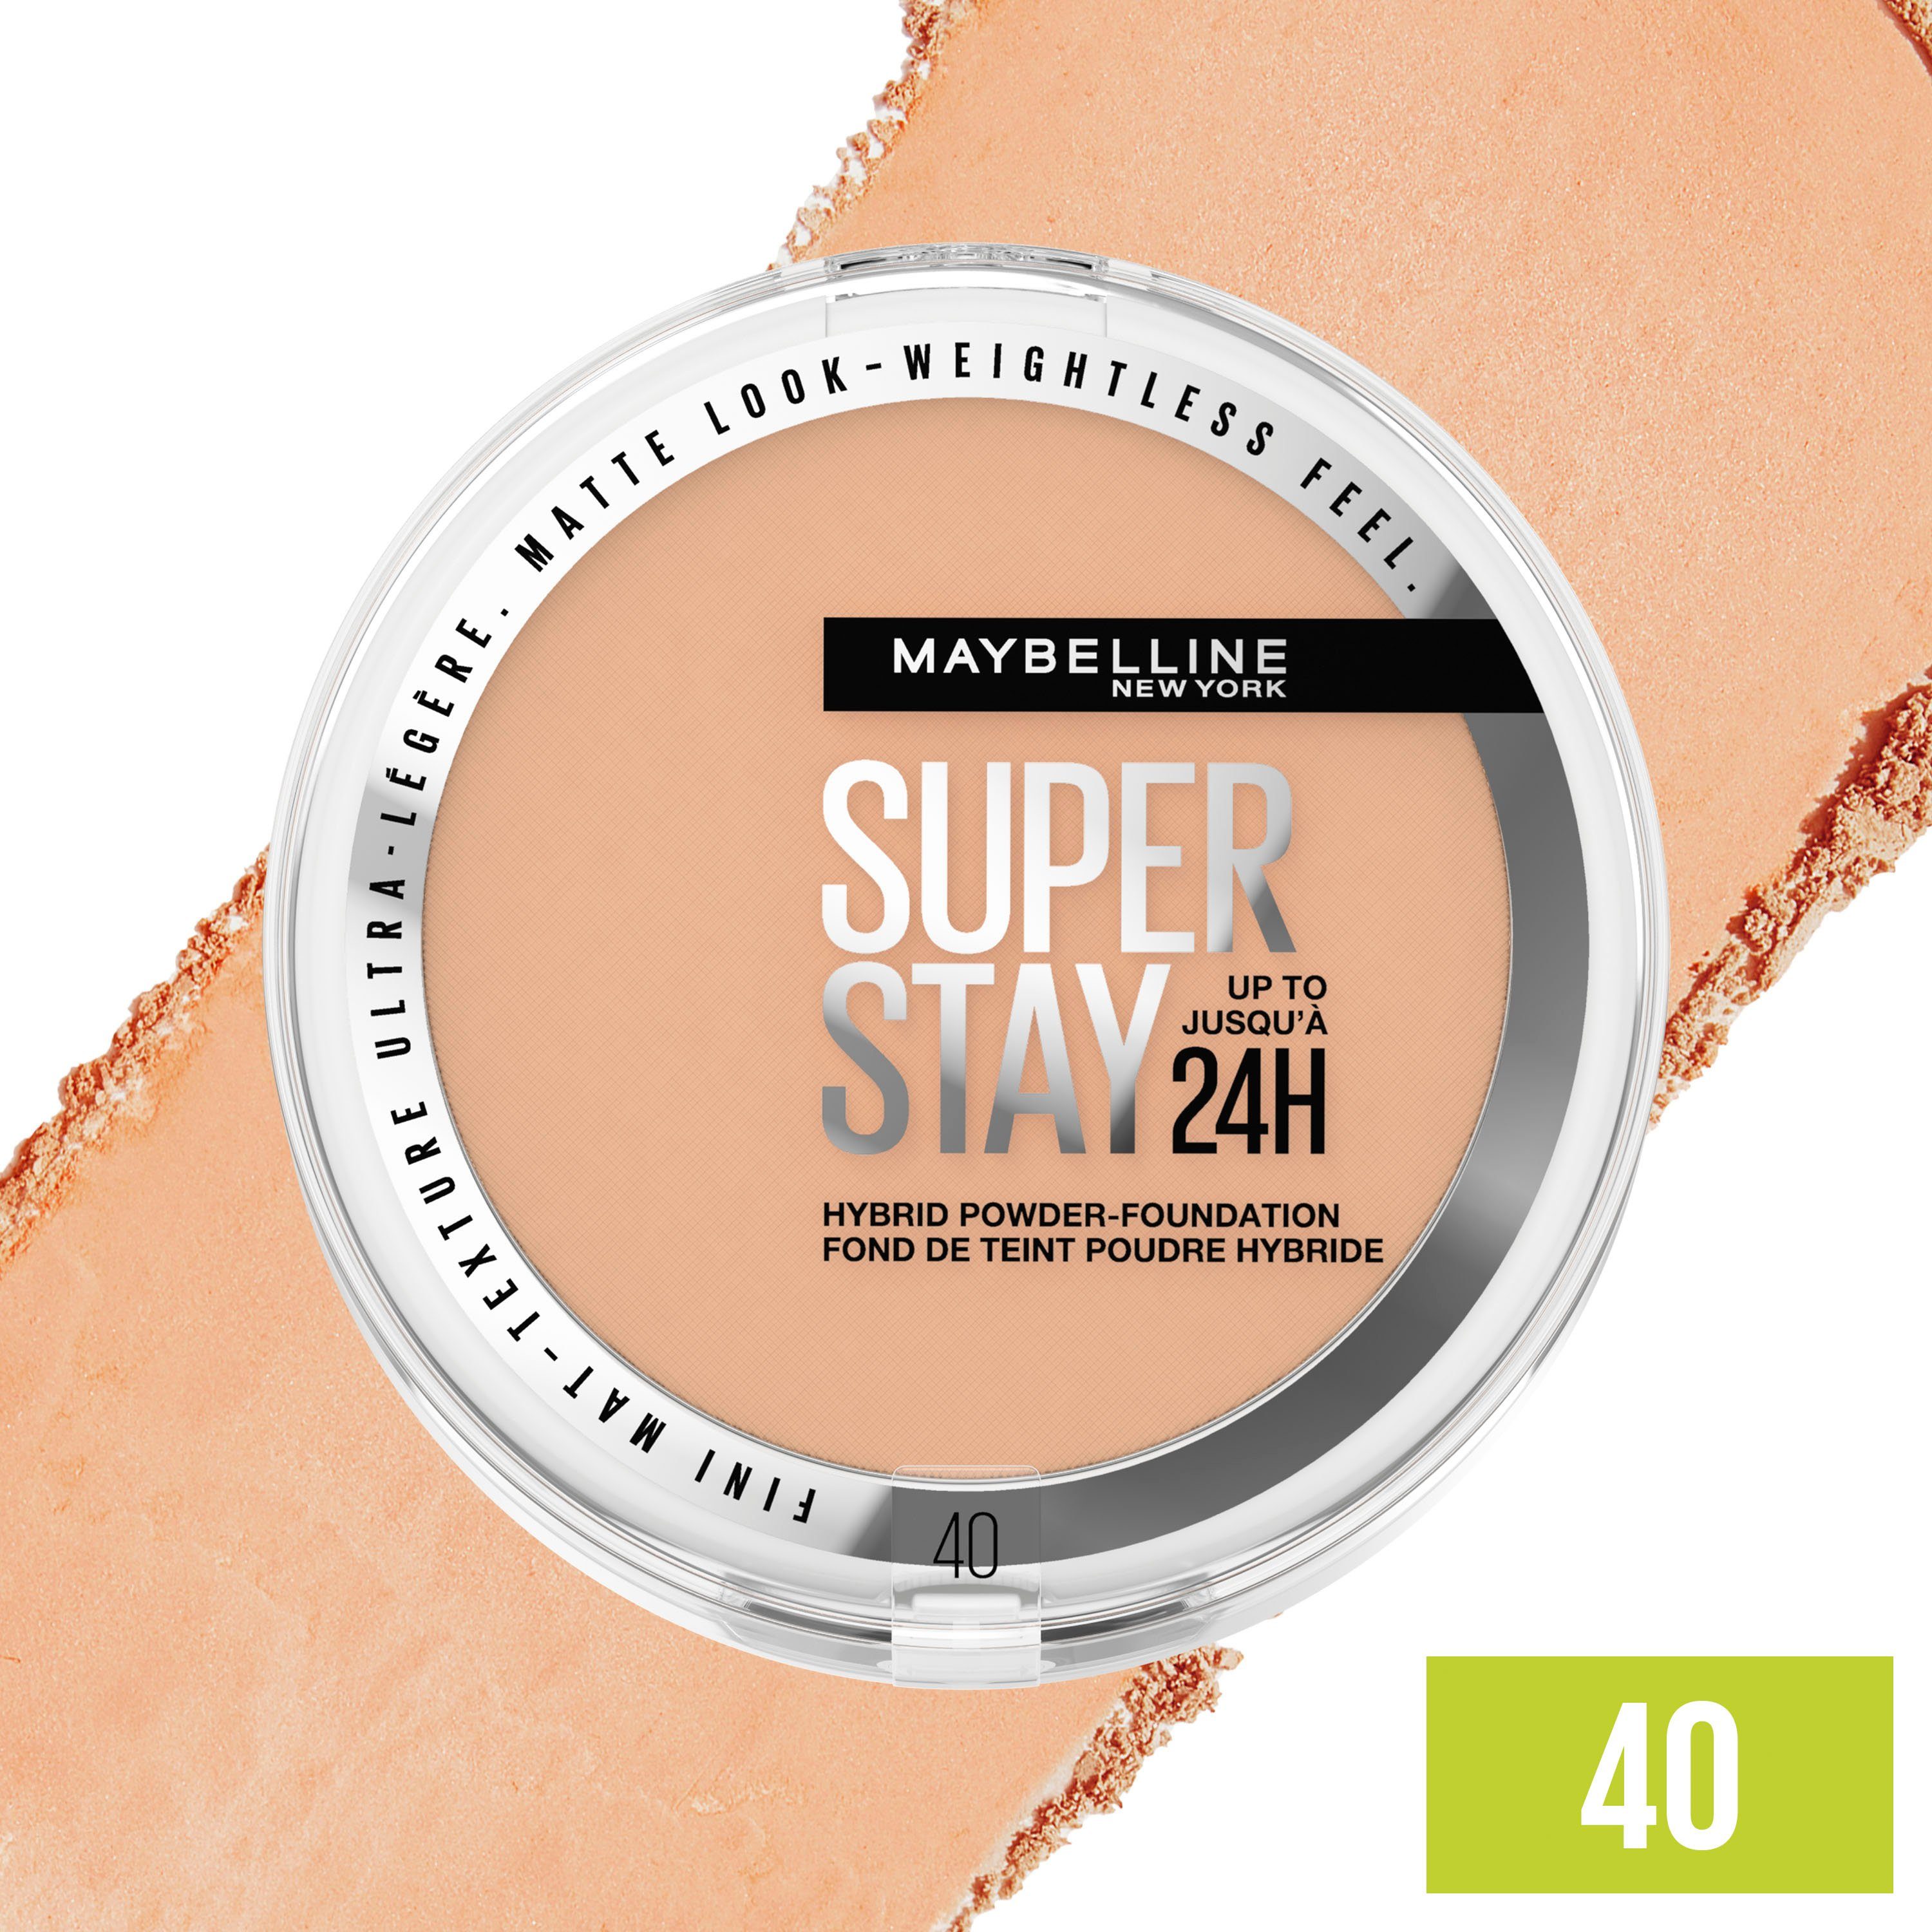 Super Make-Up Puder MAYBELLINE Hybrides YORK Maybelline Stay New York Foundation NEW